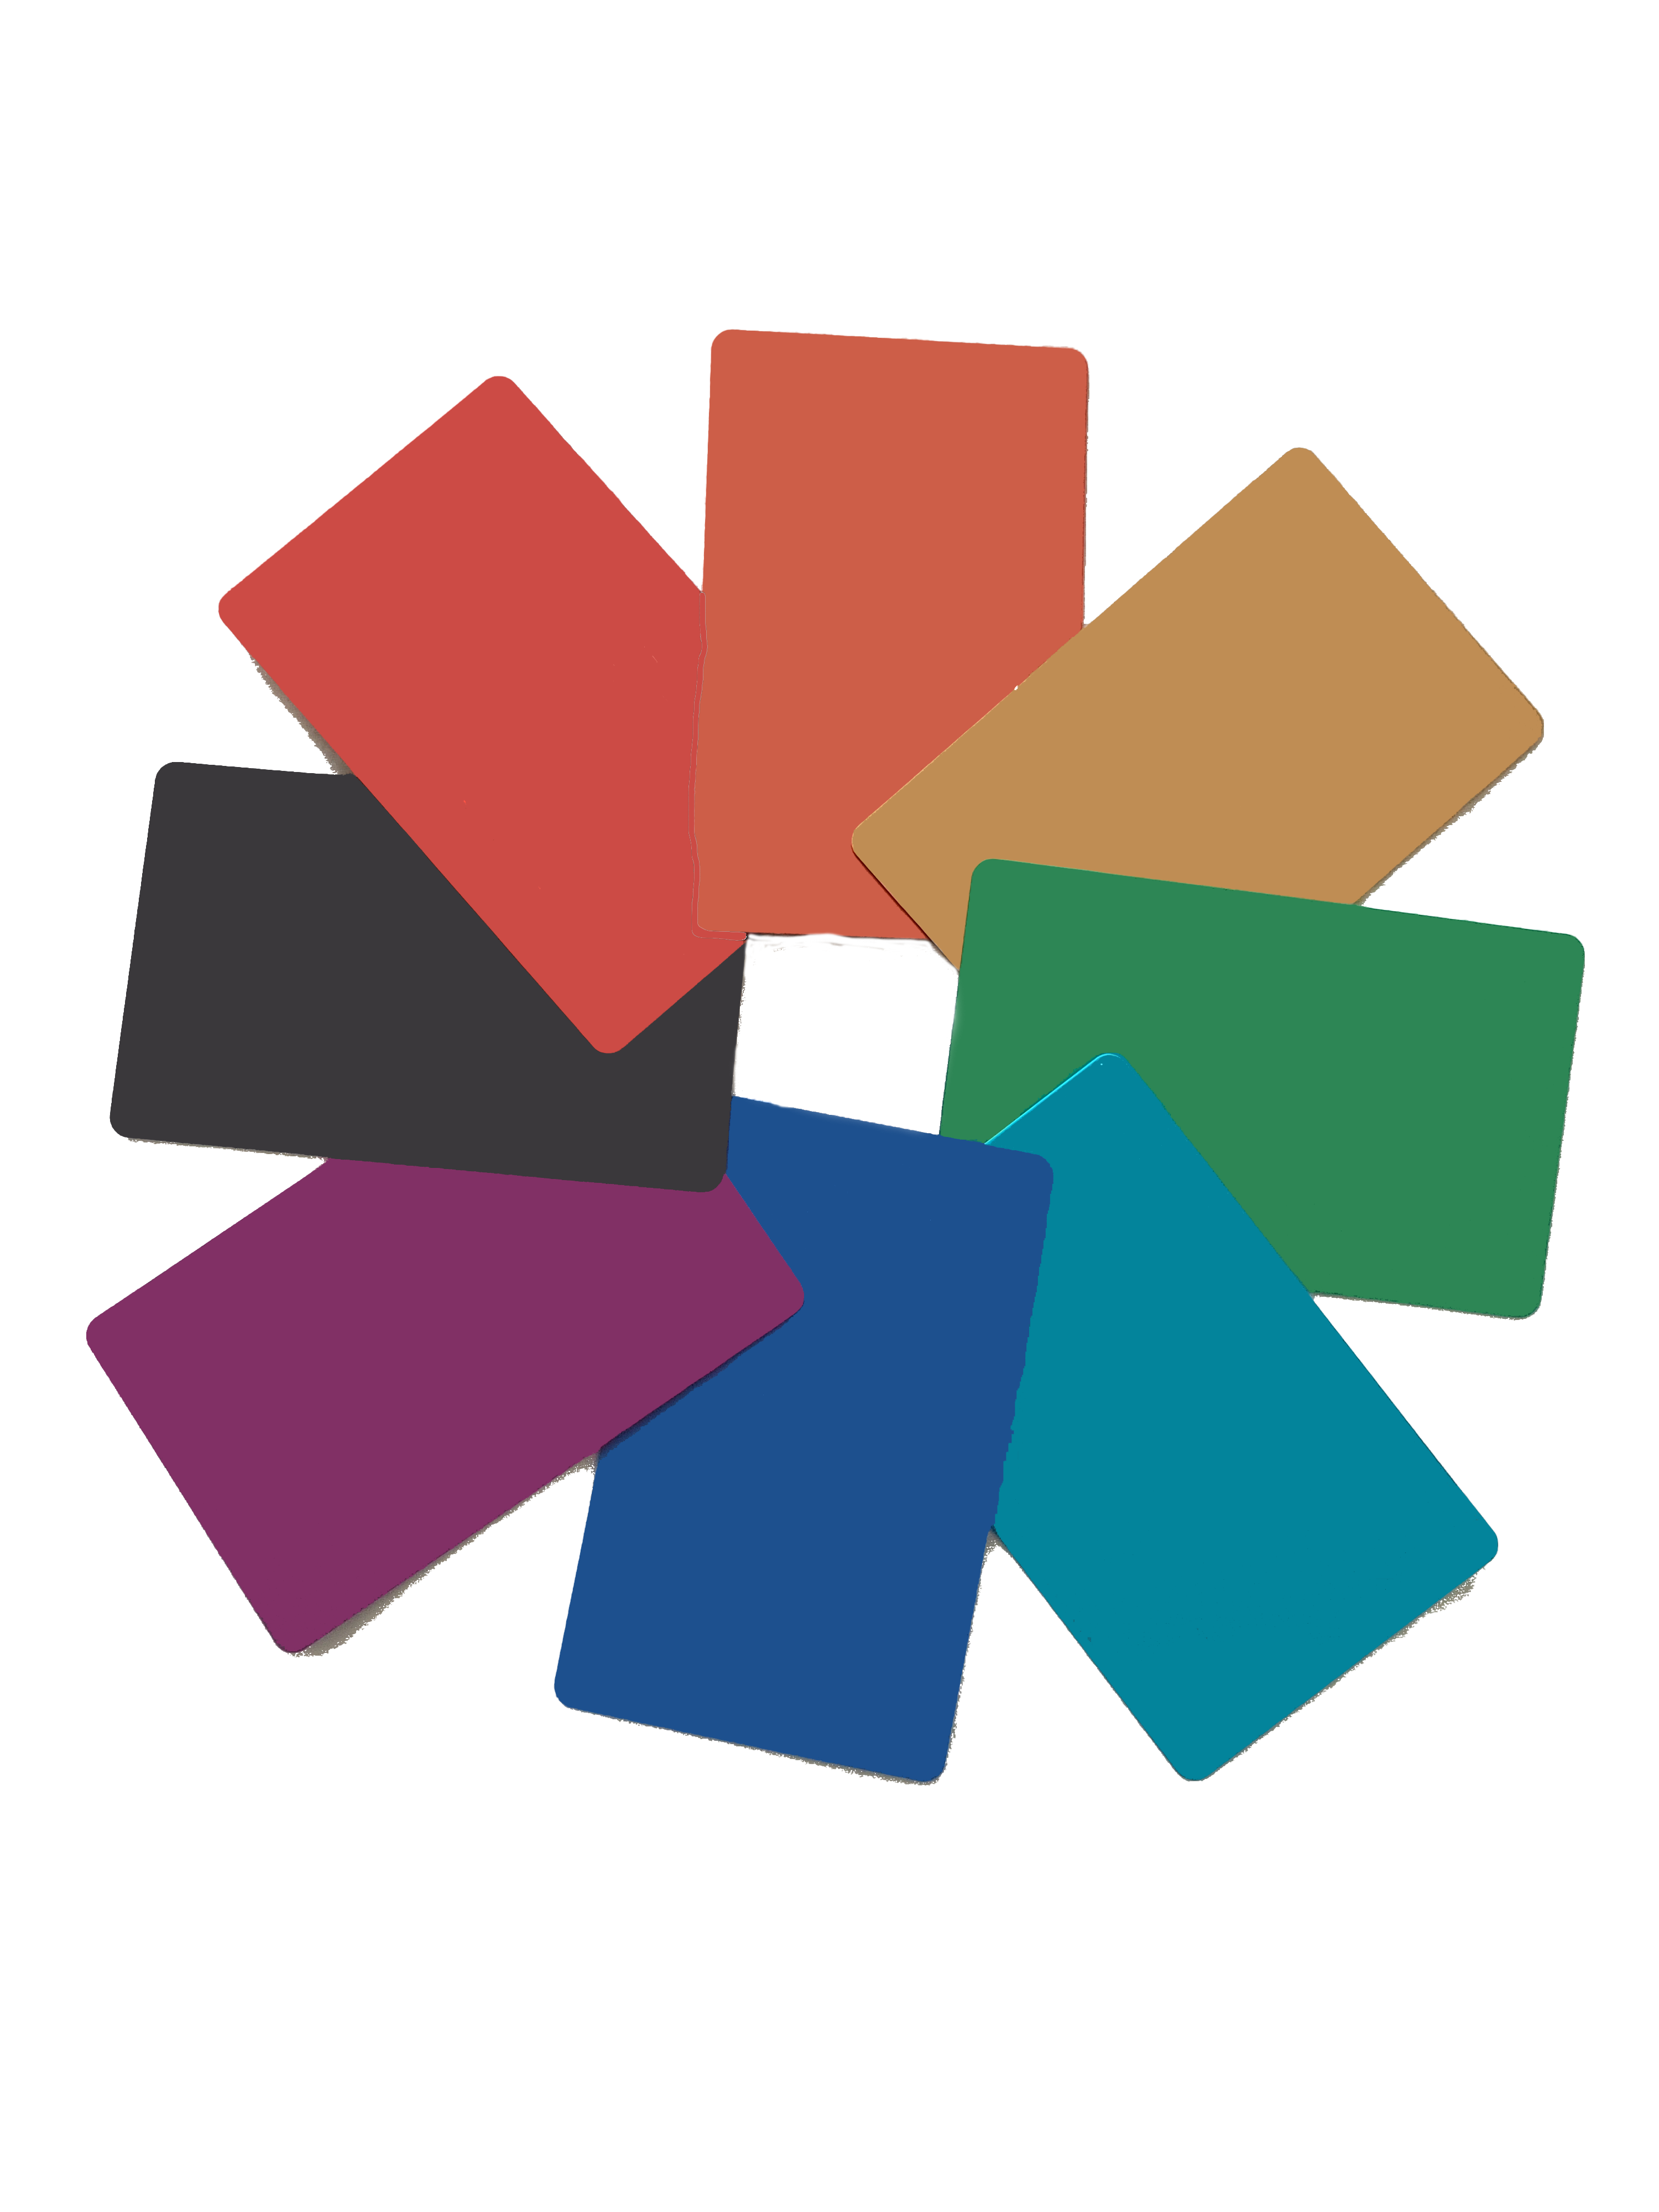 Digital business cards sample colors